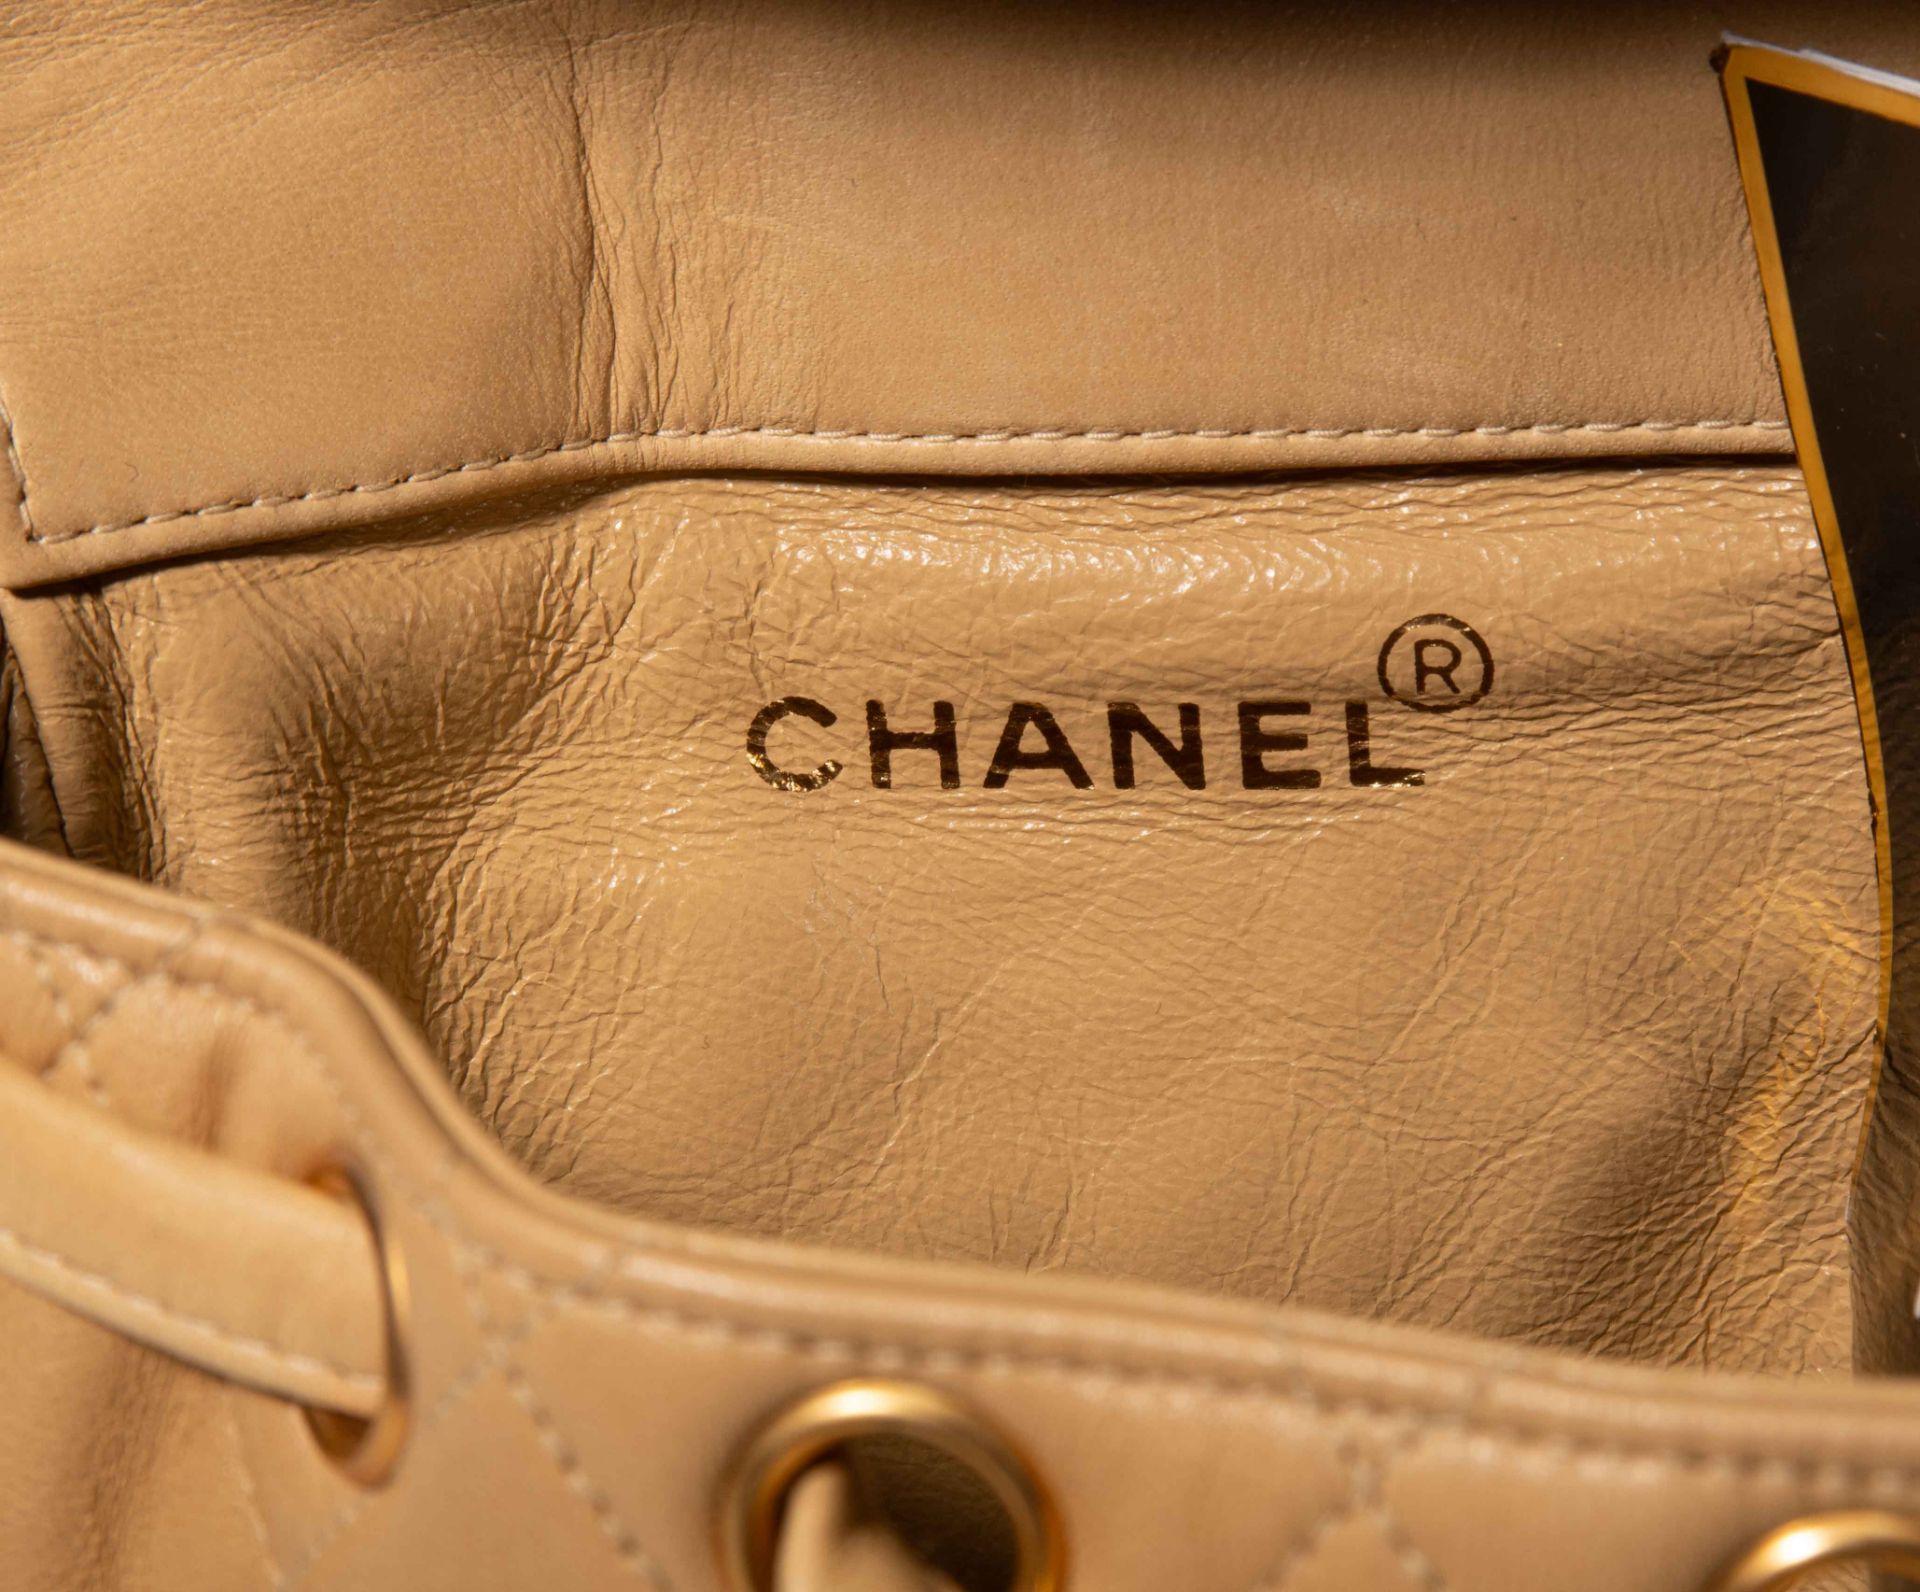 Chanel, Rucksack - Image 8 of 15